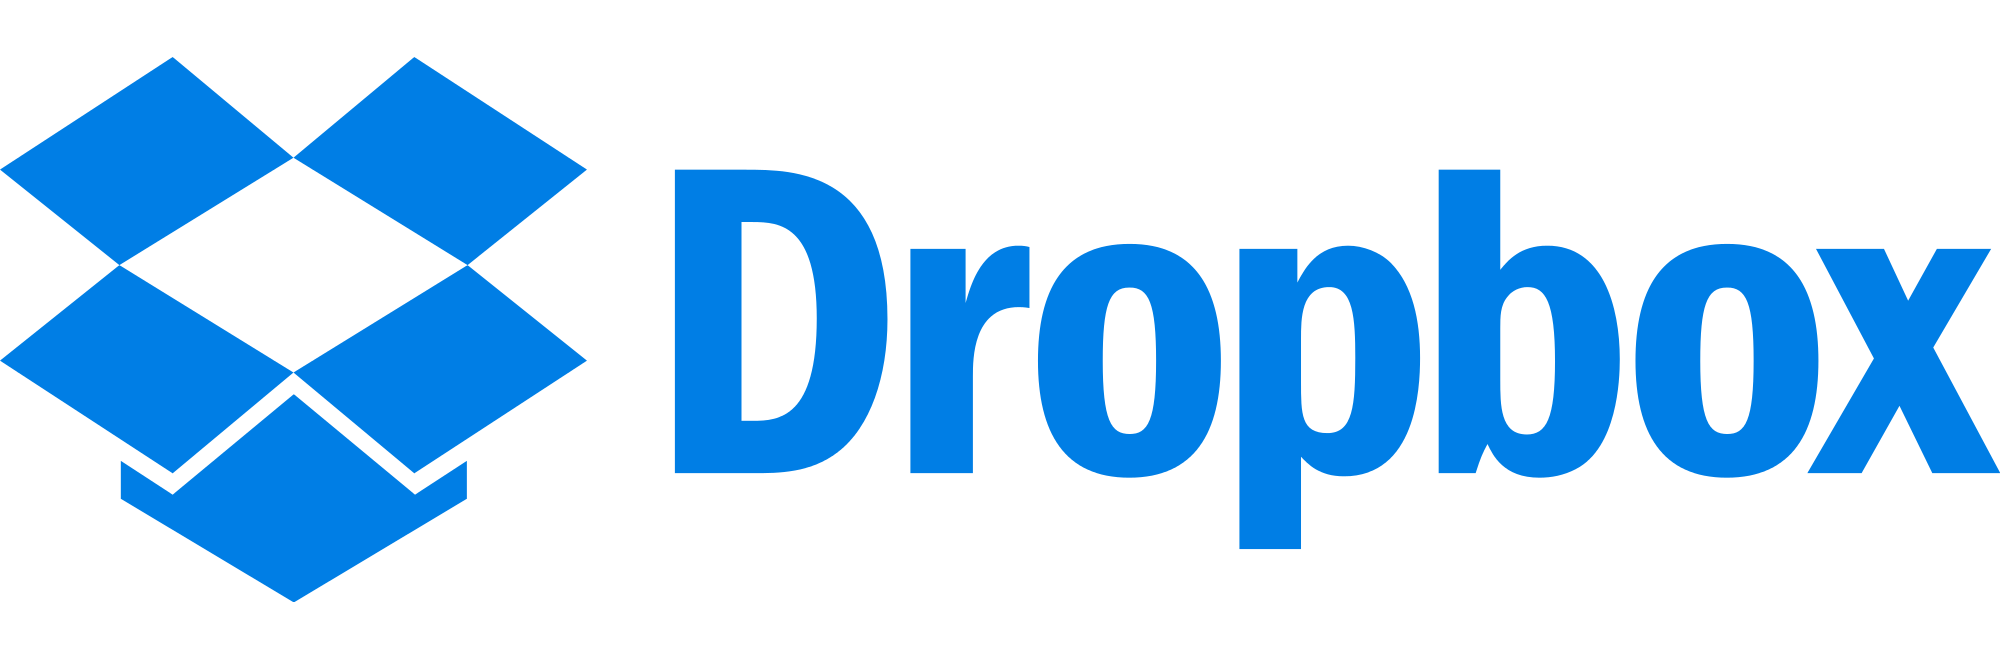 file hosting service - Dropbox